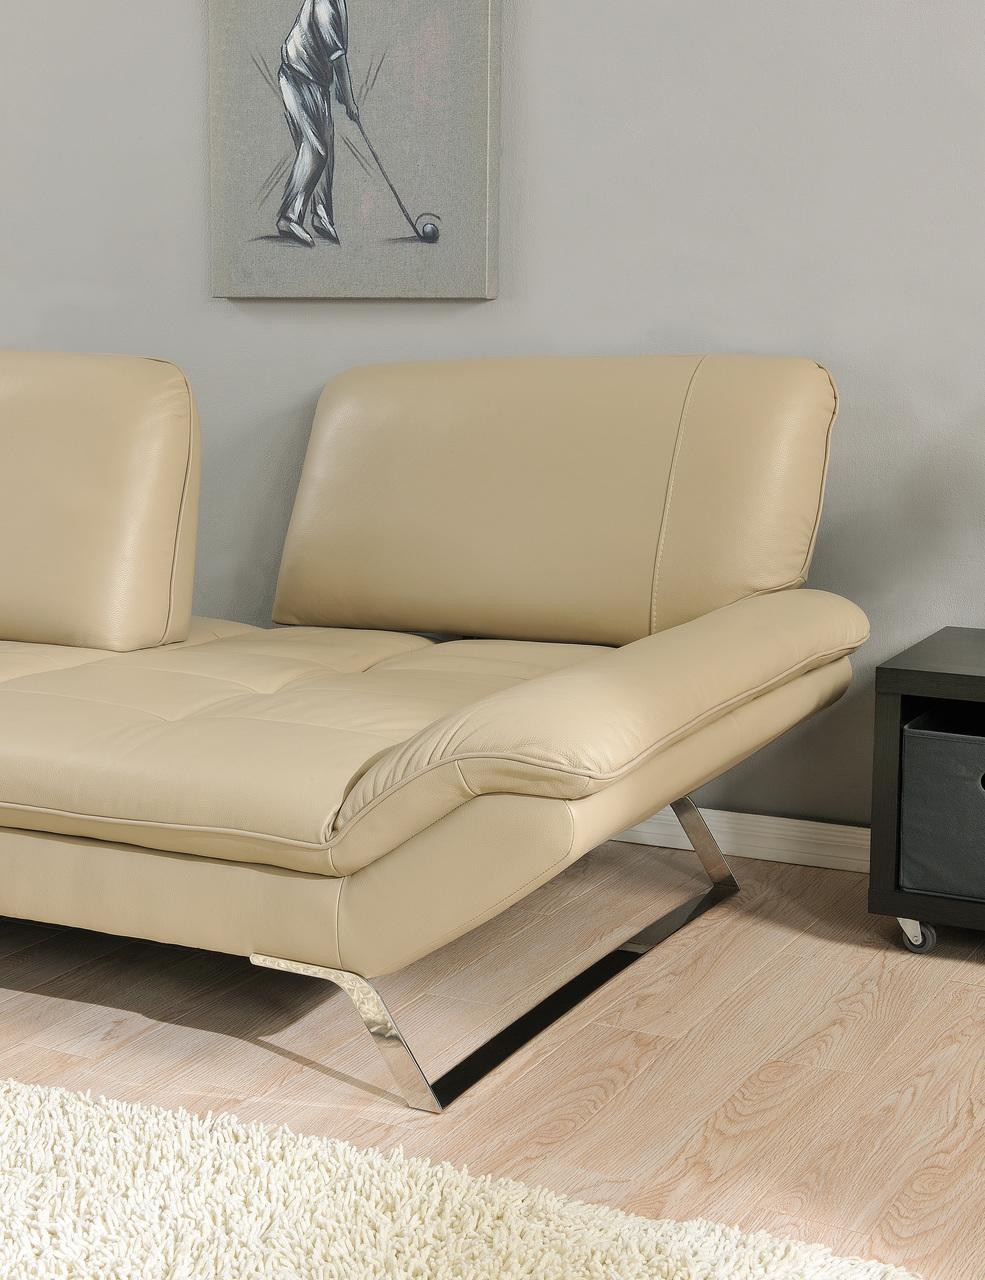 

    
SKUIGE803 At Home USA Roxi Sand Full Italian Leather Sofa Contemporary Modern
